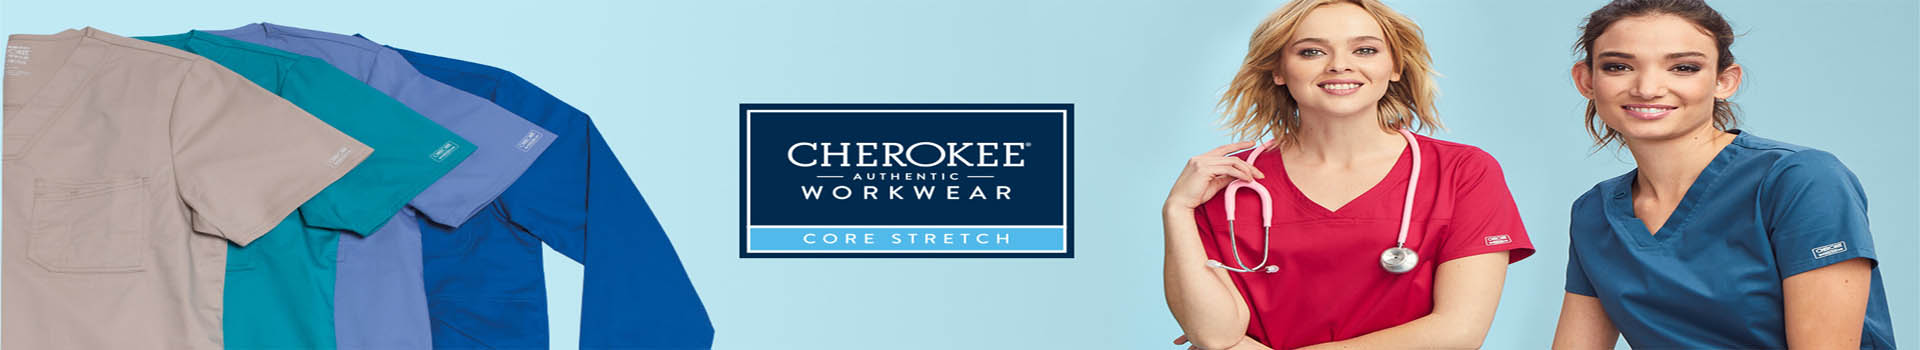 Workwear Core Stretch